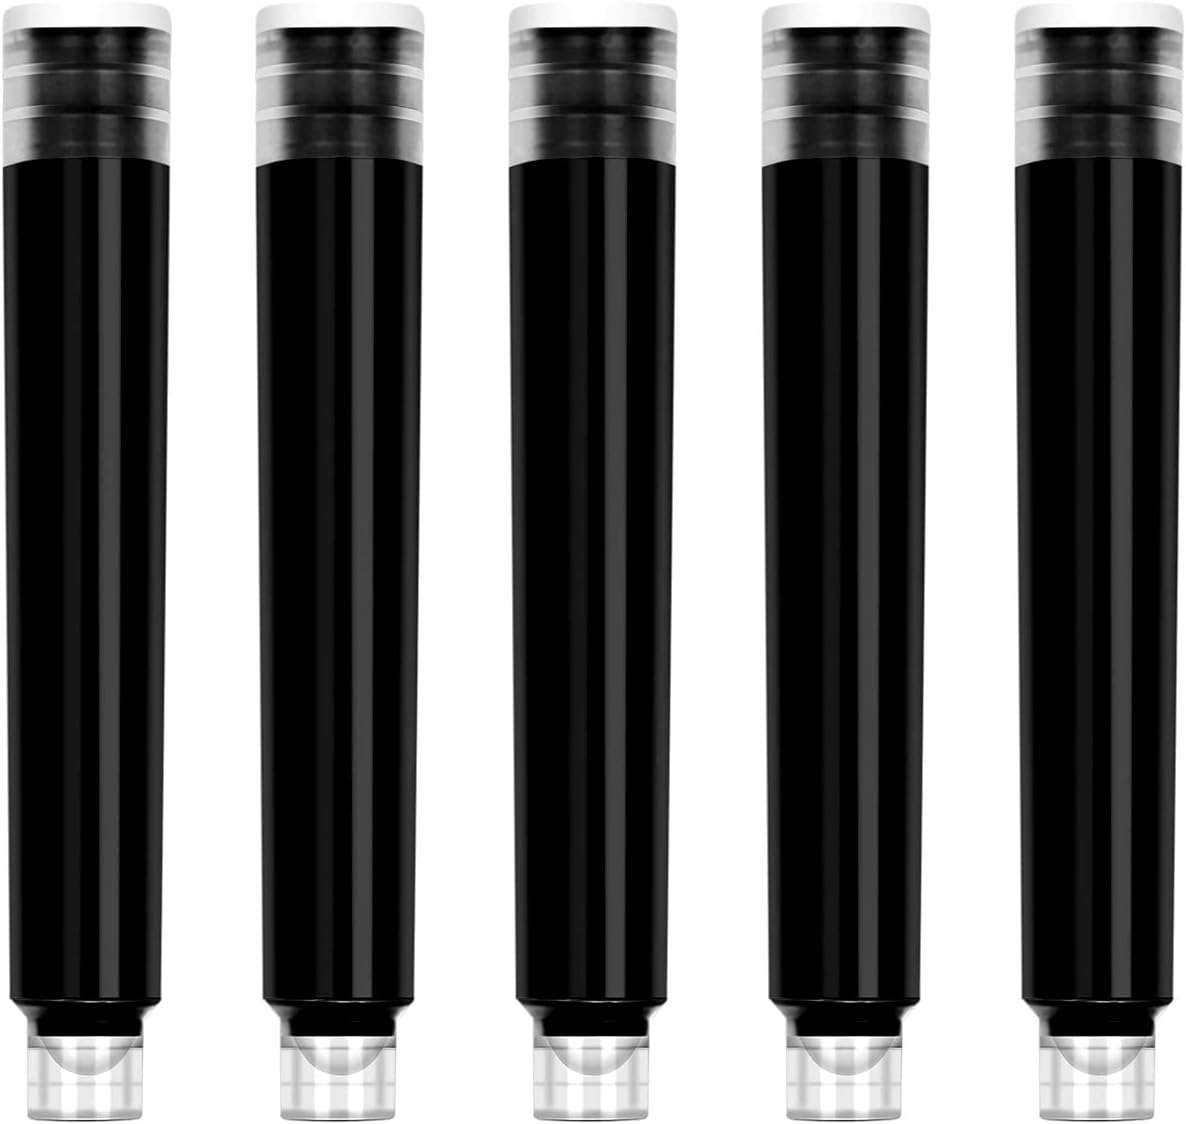 BEILUNER Fountain Pen Set Ink Cartridges Black Color